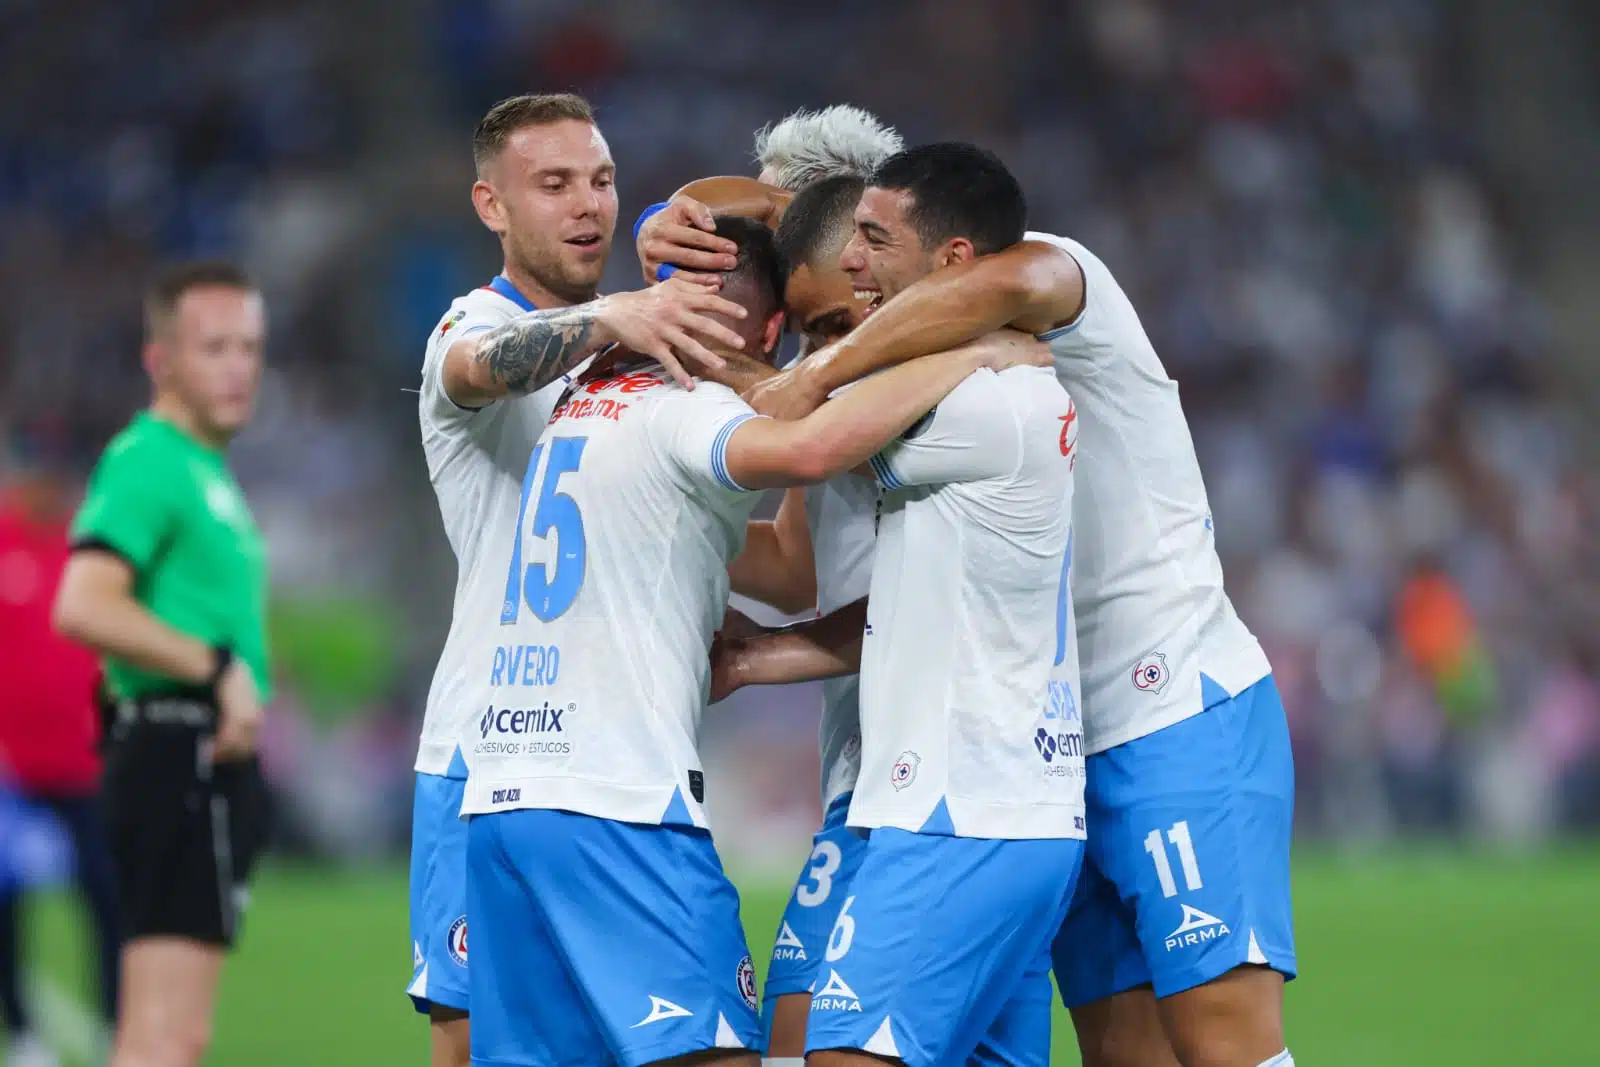 Jugadores de Cruz Azul celebrando tras vencer a Rayados de Monterrey